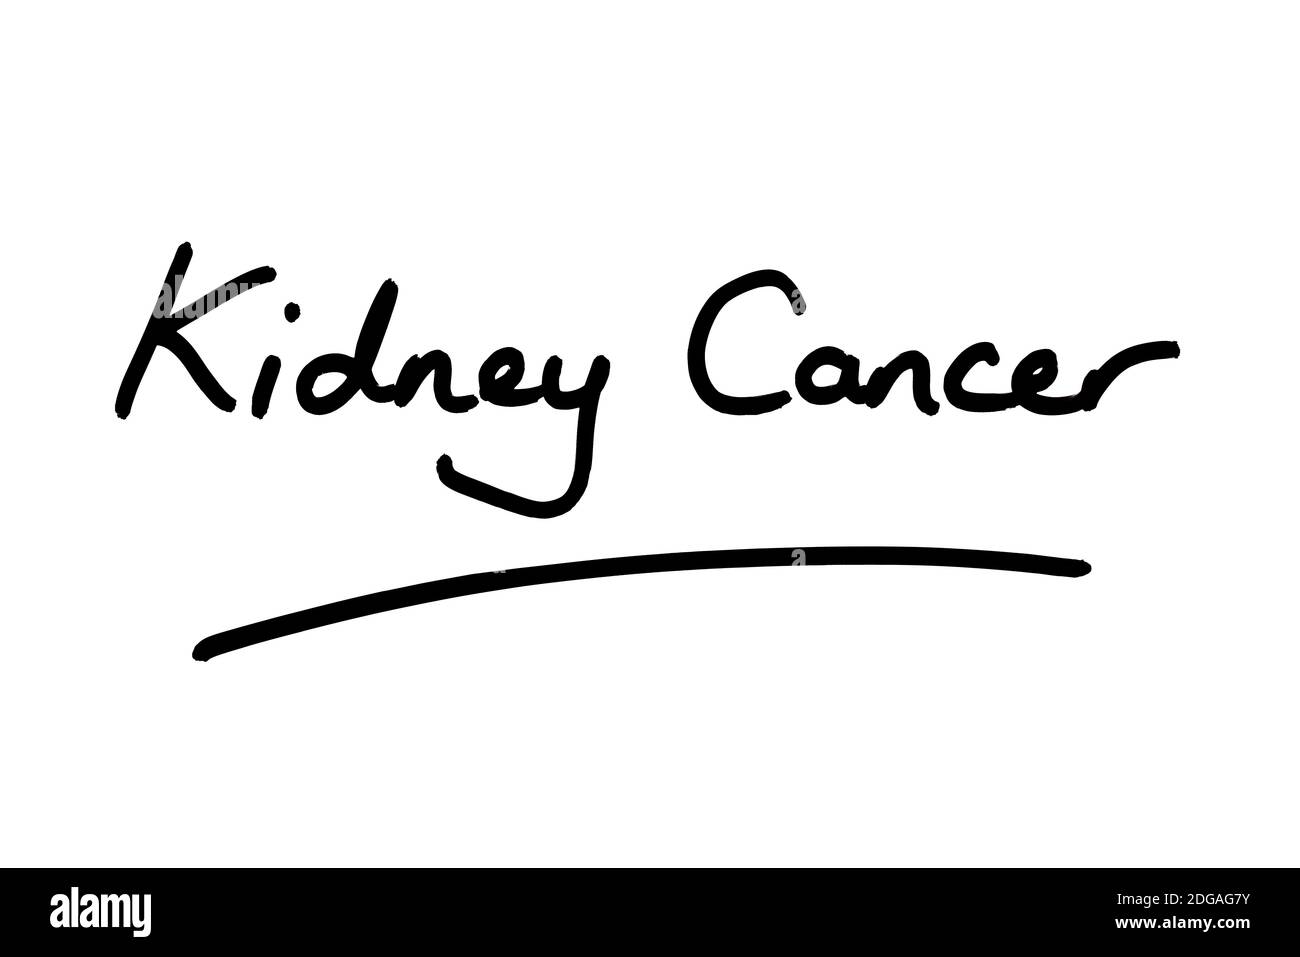 Kidney Cancer handwritten on a white background. Stock Photo